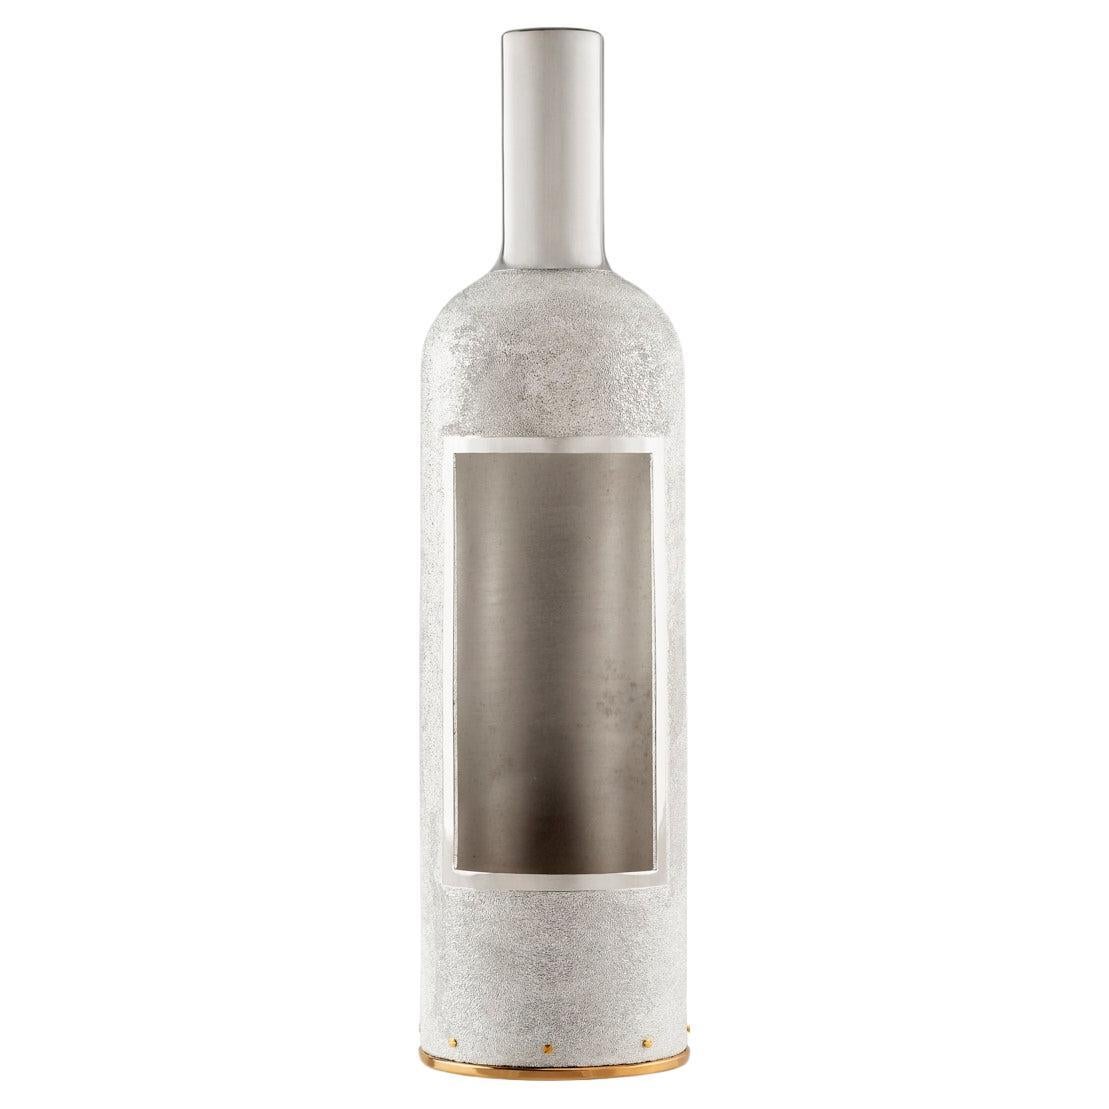 K-OVER wine, MOONLIGHT WITH WINDOW, argento 999/°°, Italia